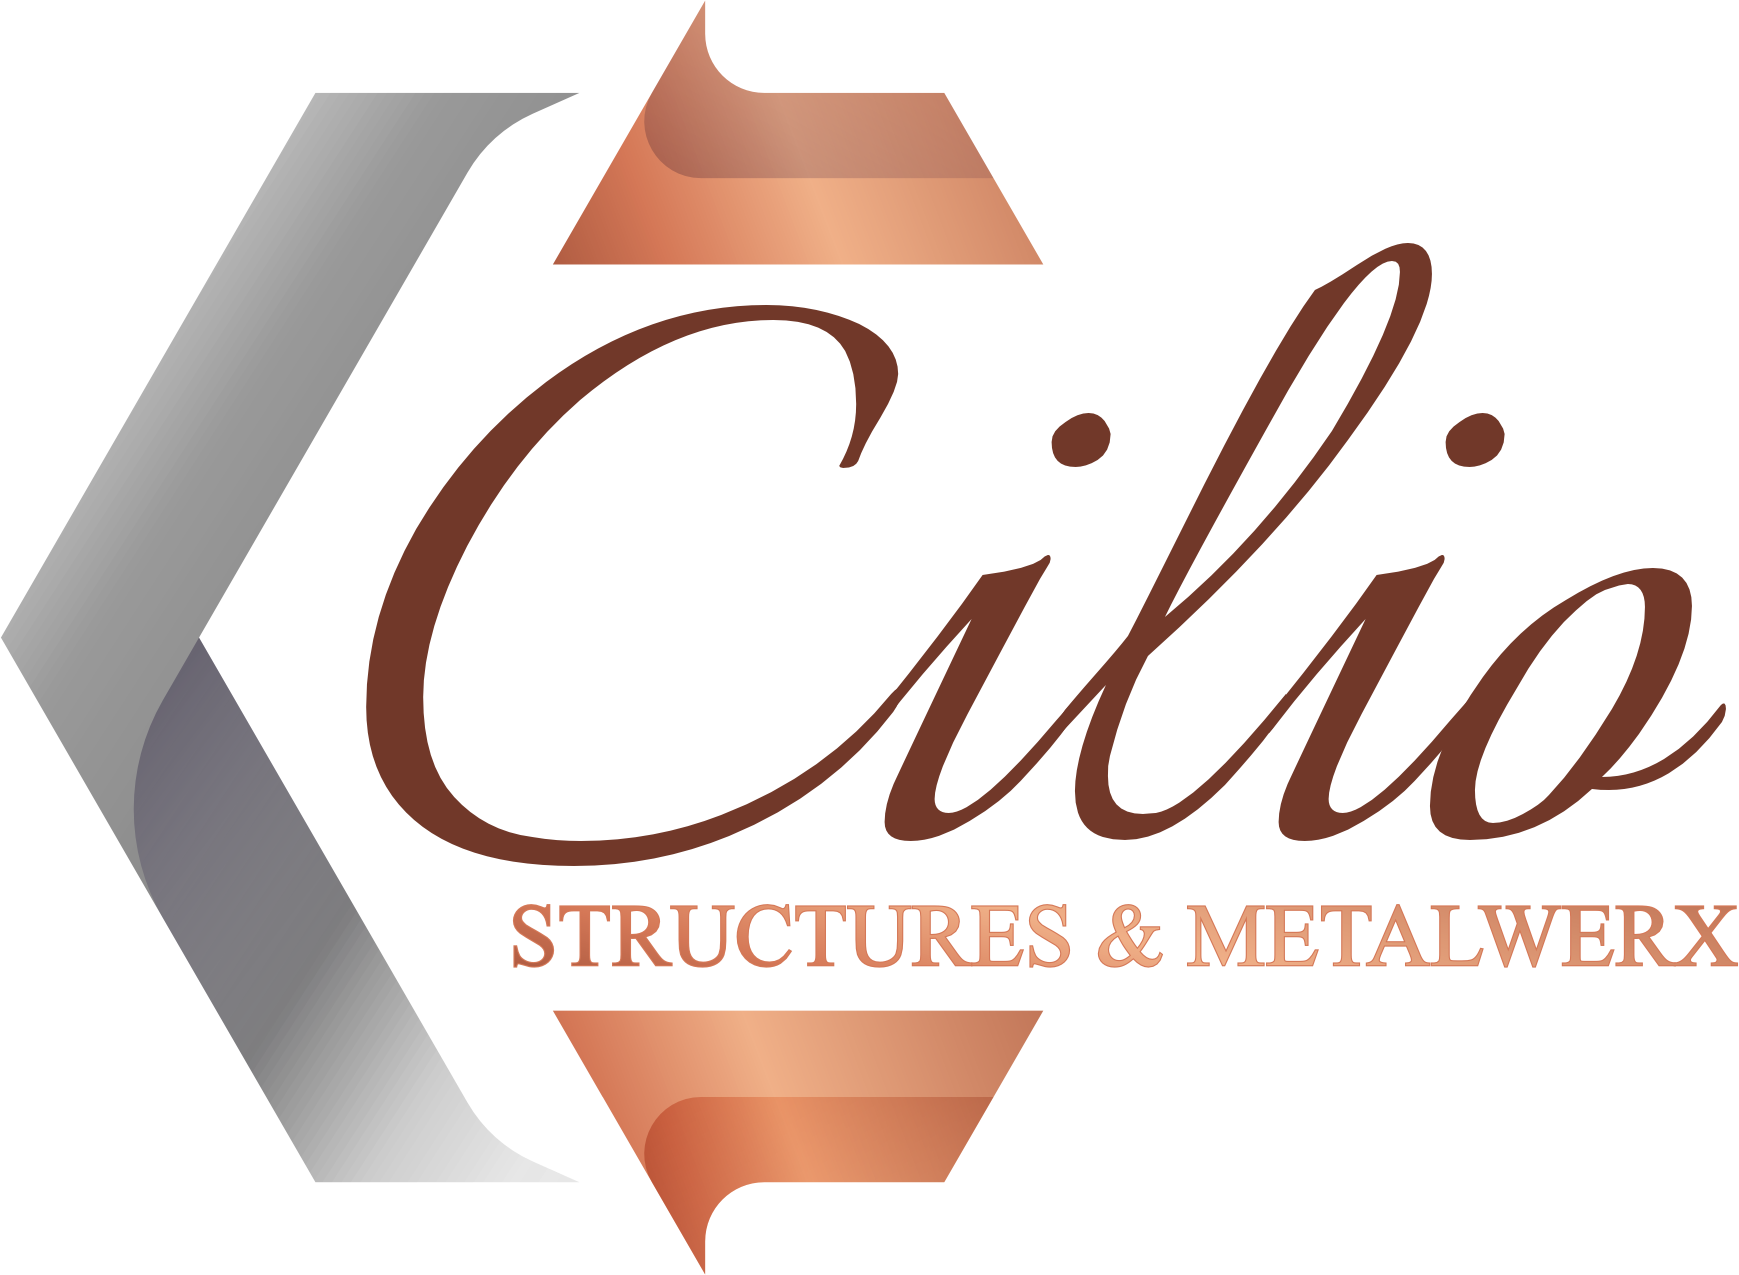 Cilio Structures & Metalwerx Logo